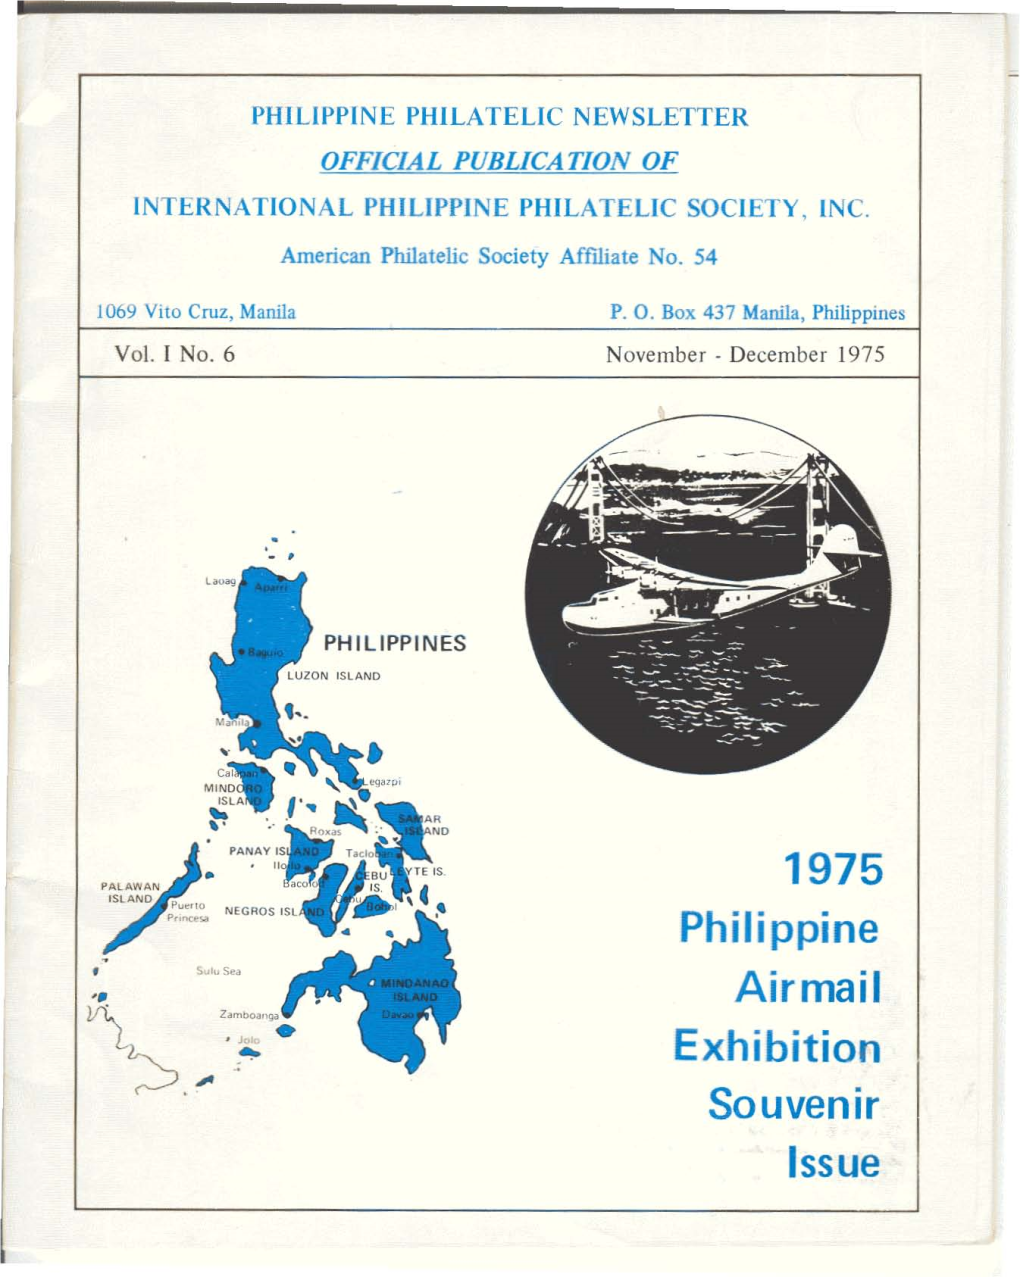 1975 Philippine Airmail Exhibition Souvenir Issue